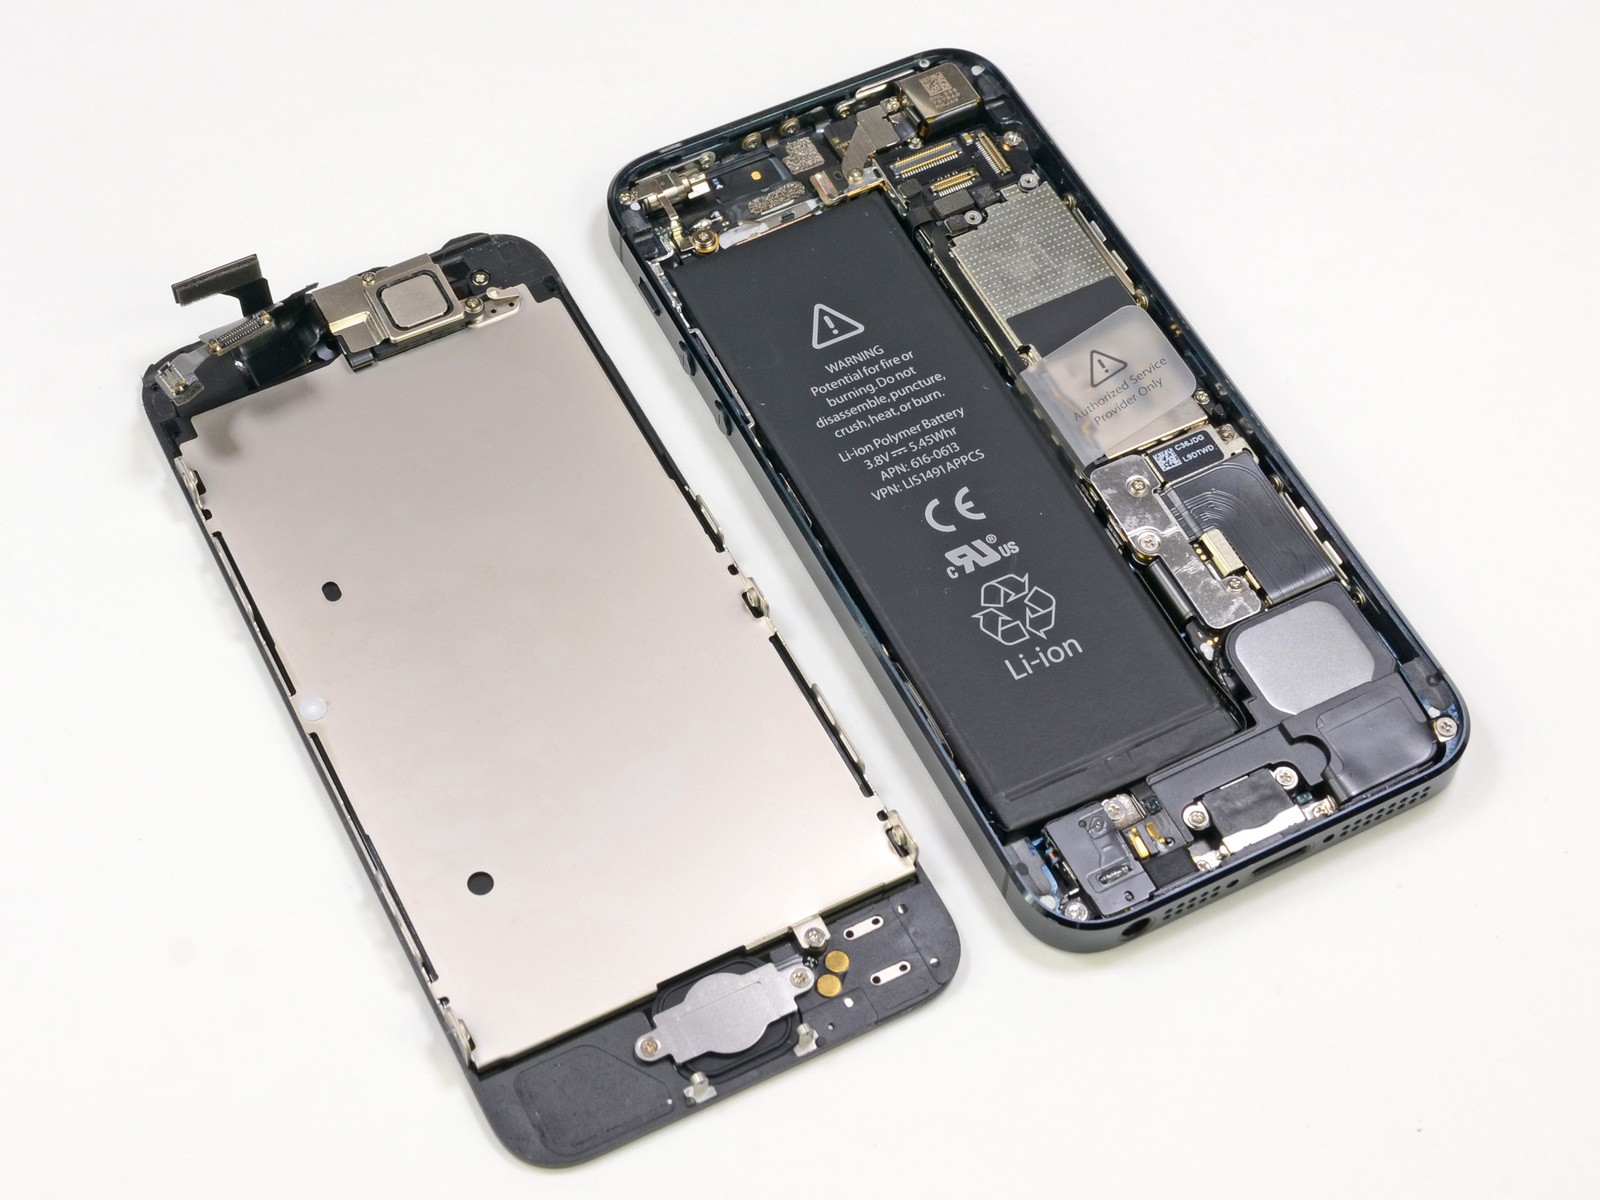 Almindeligt Implement røveri iPhone 5 Battery Problems? Apple Will Change It for Free